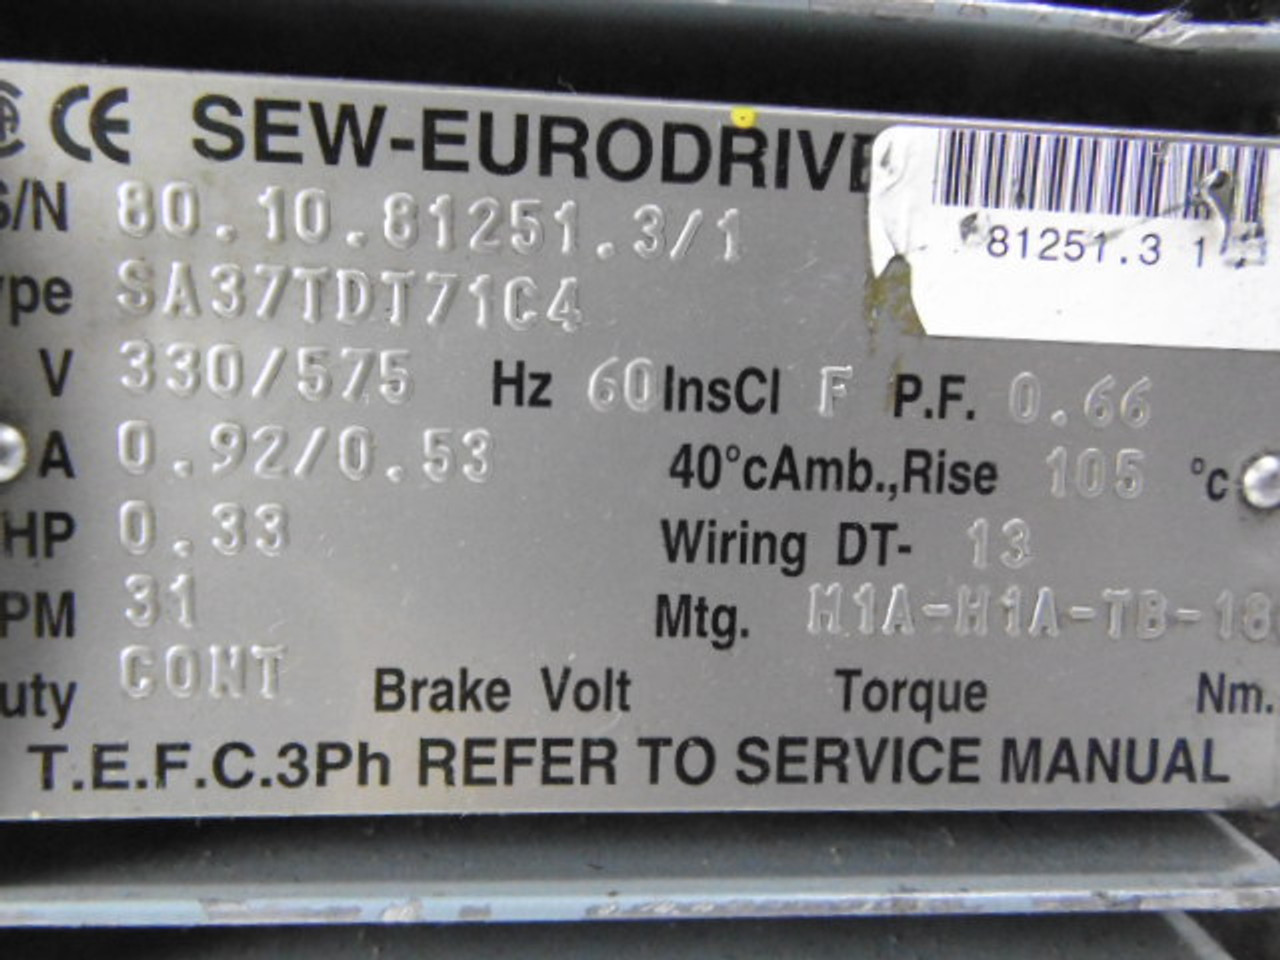 Sew-Eurodrive 0.33HP 31RPM 330/575V 71 TEFC 3Ph 0.92/0.53A 60Hz USED